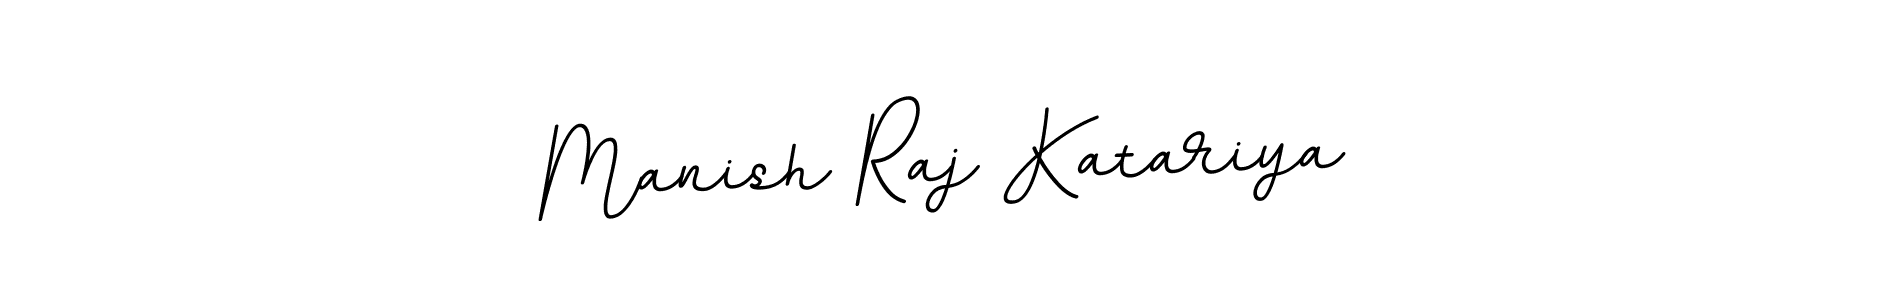 How to Draw Manish Raj Katariya signature style? BallpointsItalic-DORy9 is a latest design signature styles for name Manish Raj Katariya. Manish Raj Katariya signature style 11 images and pictures png